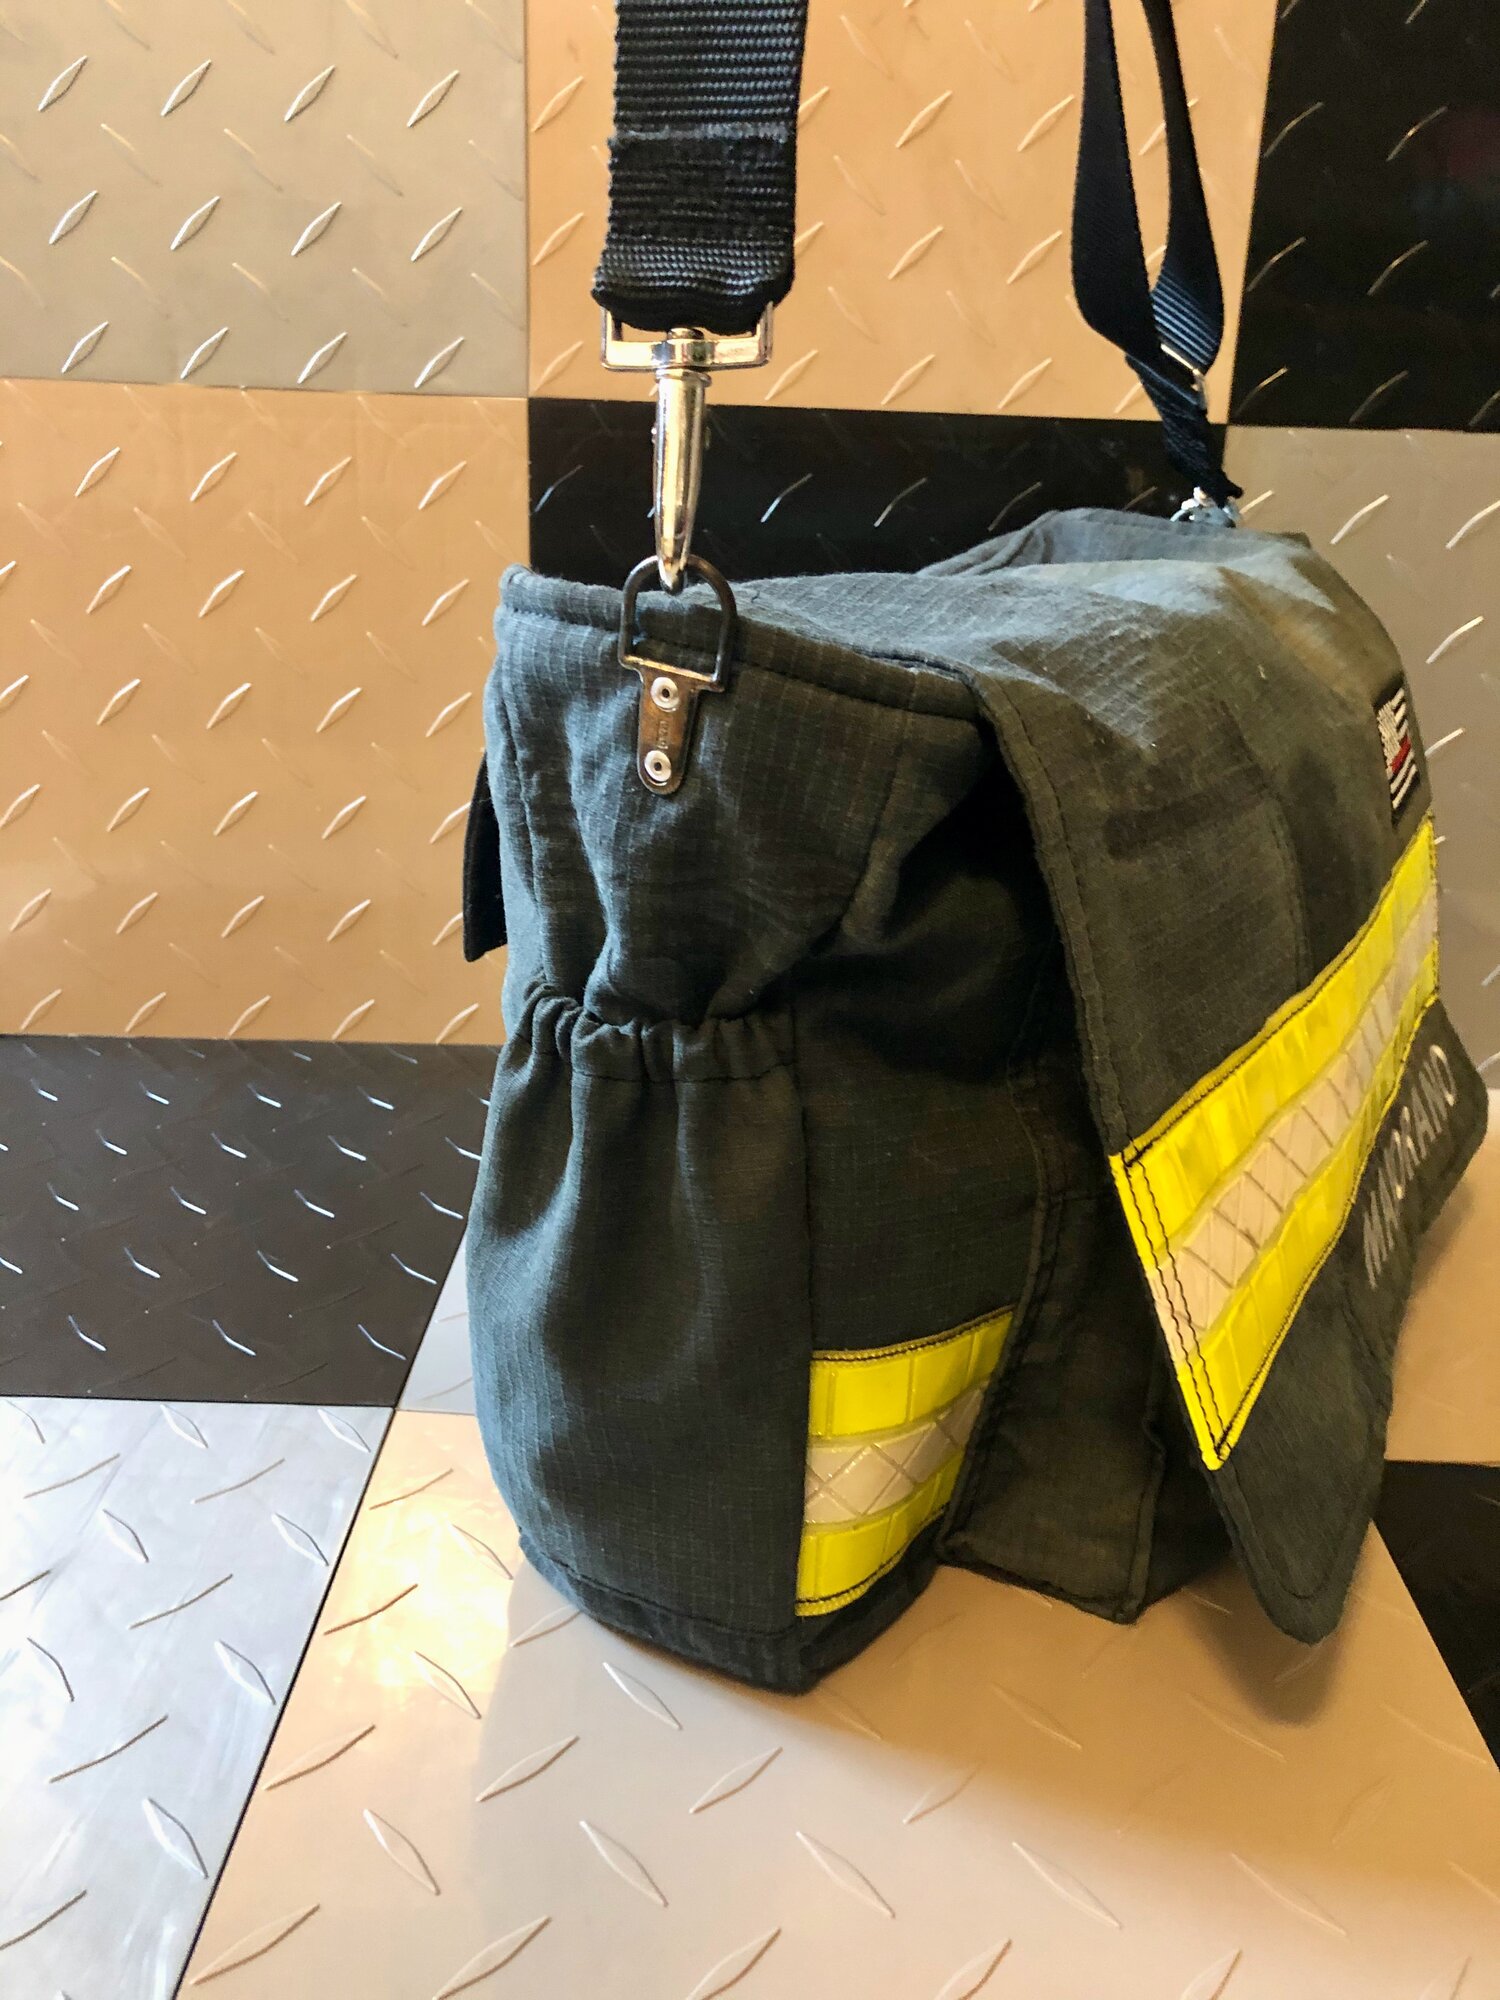 Firefighter Turnout Gear Trolley Bag